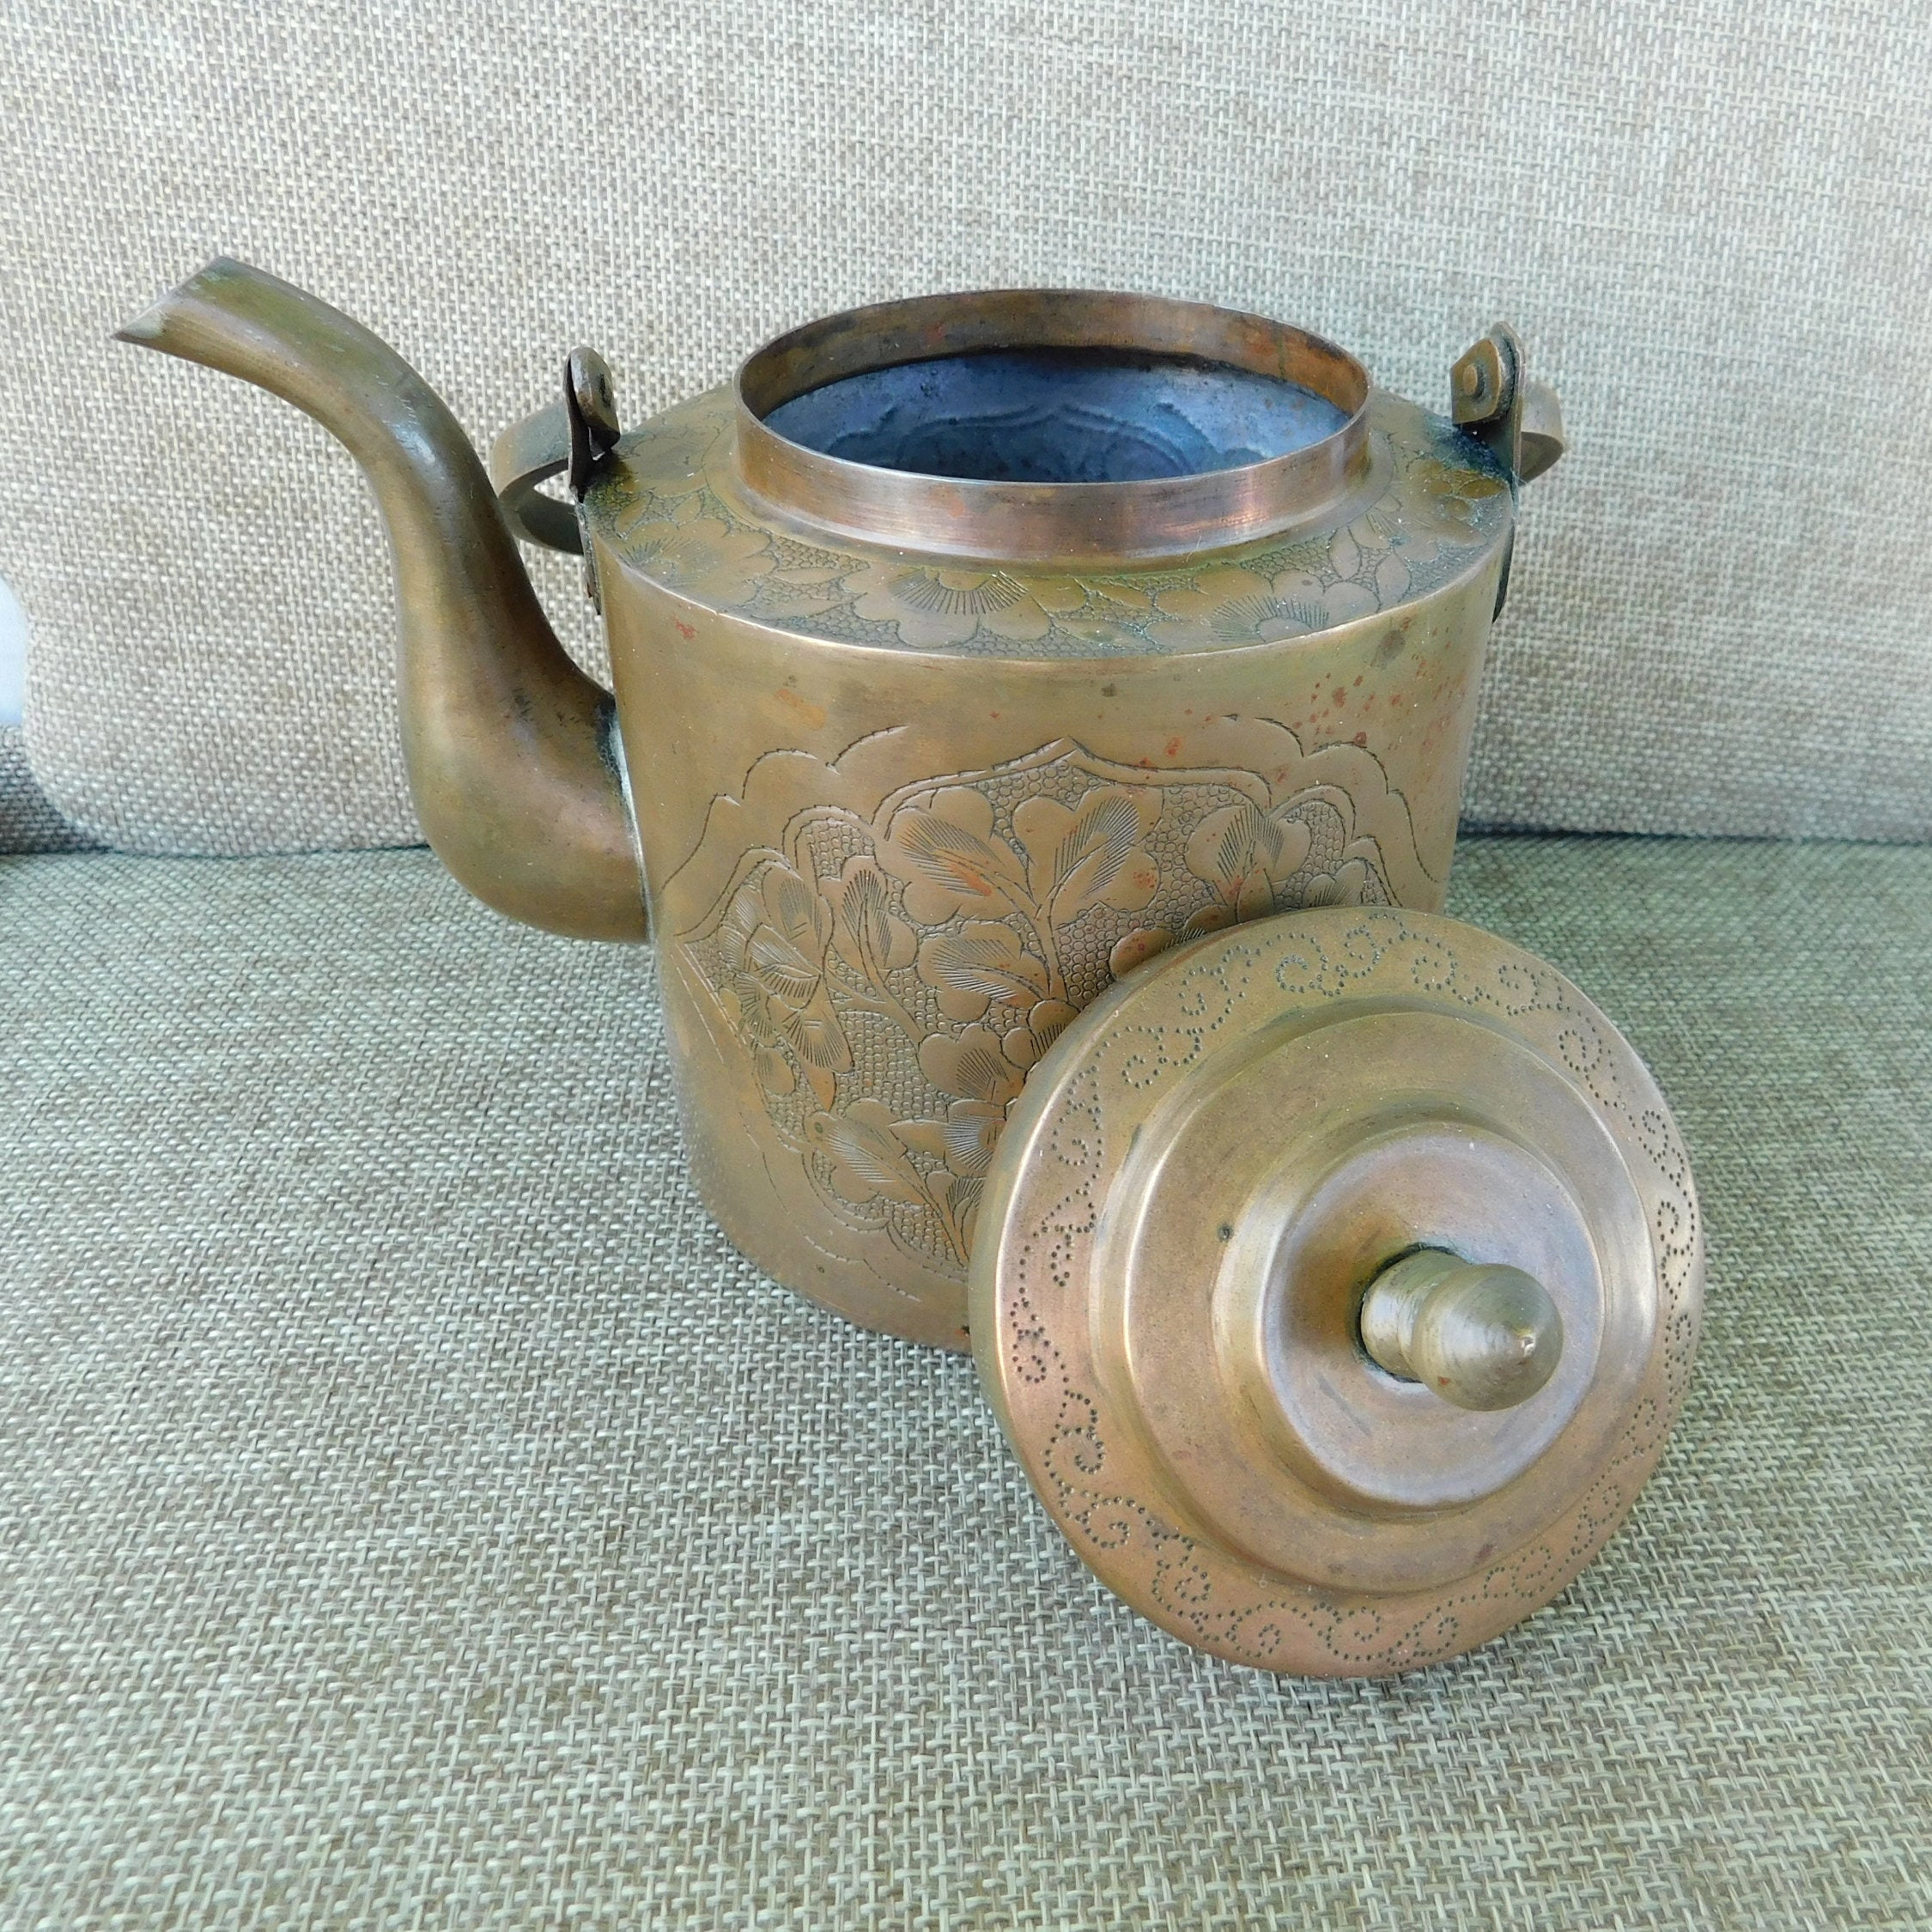 European Farmhouse Antique Brass Teapot or Kettle